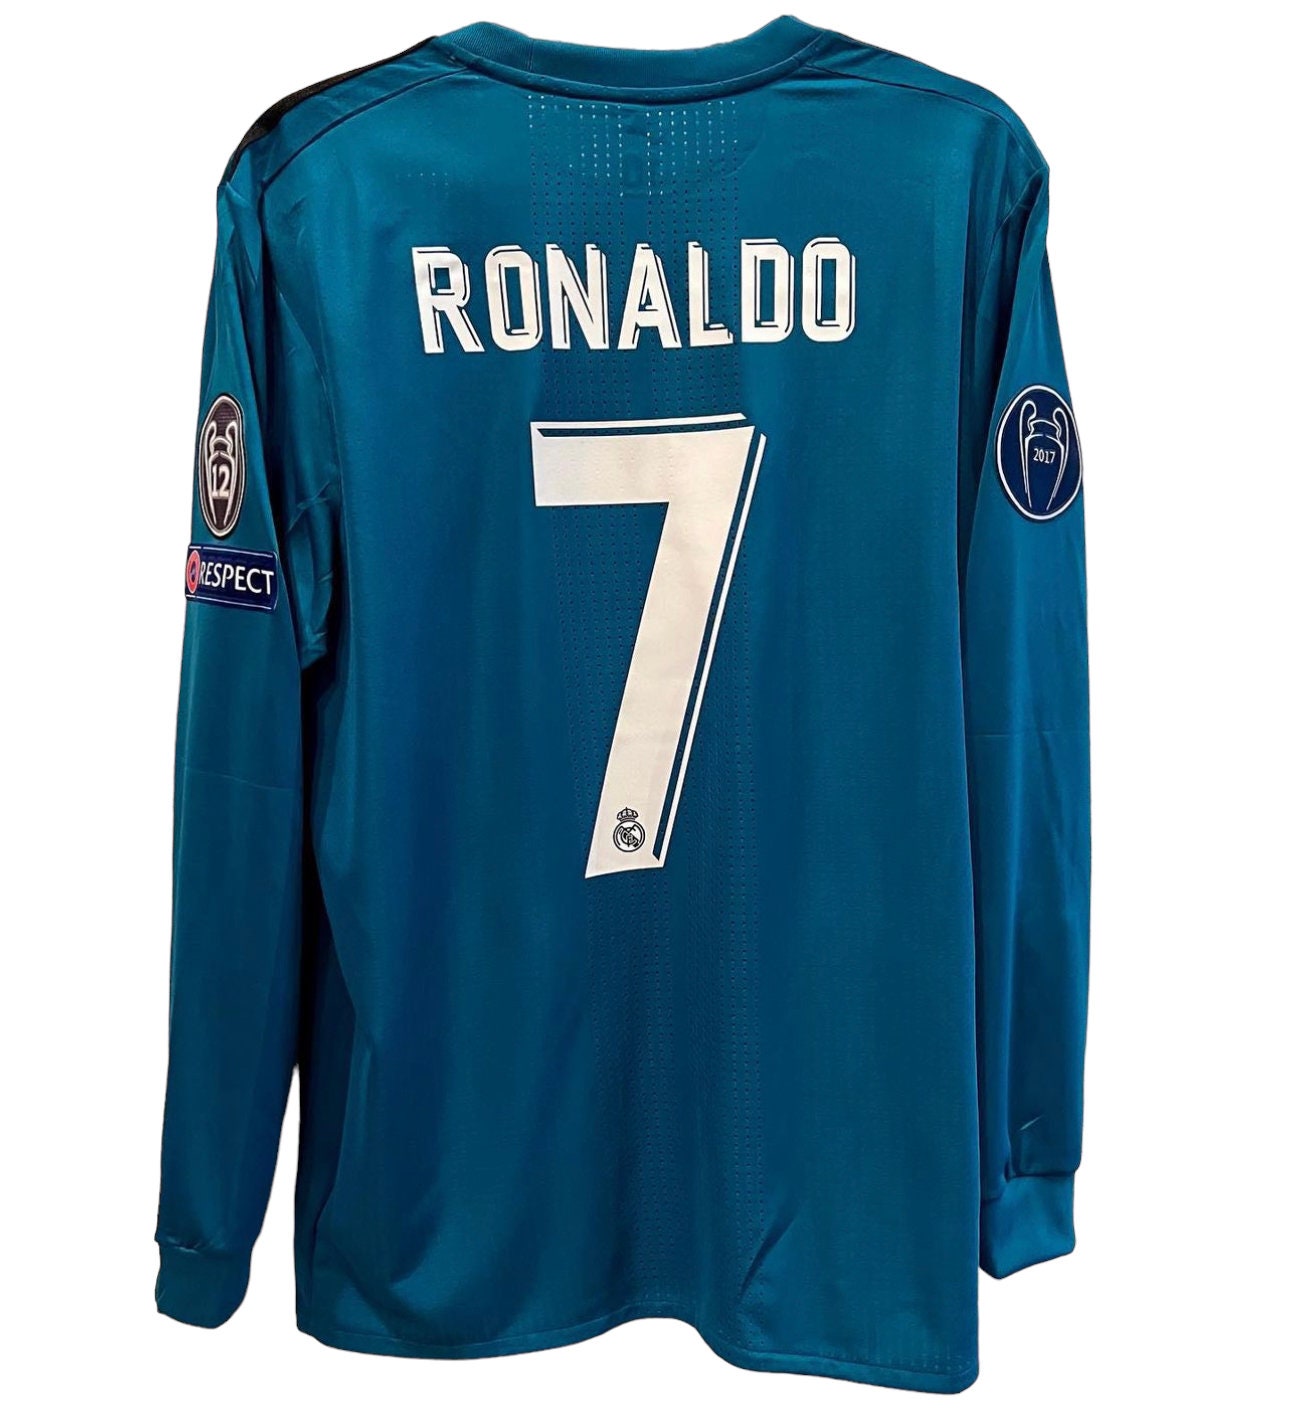 Ronaldo Real Madrid UEFA Long Sleeve Teal Blue - Etsy